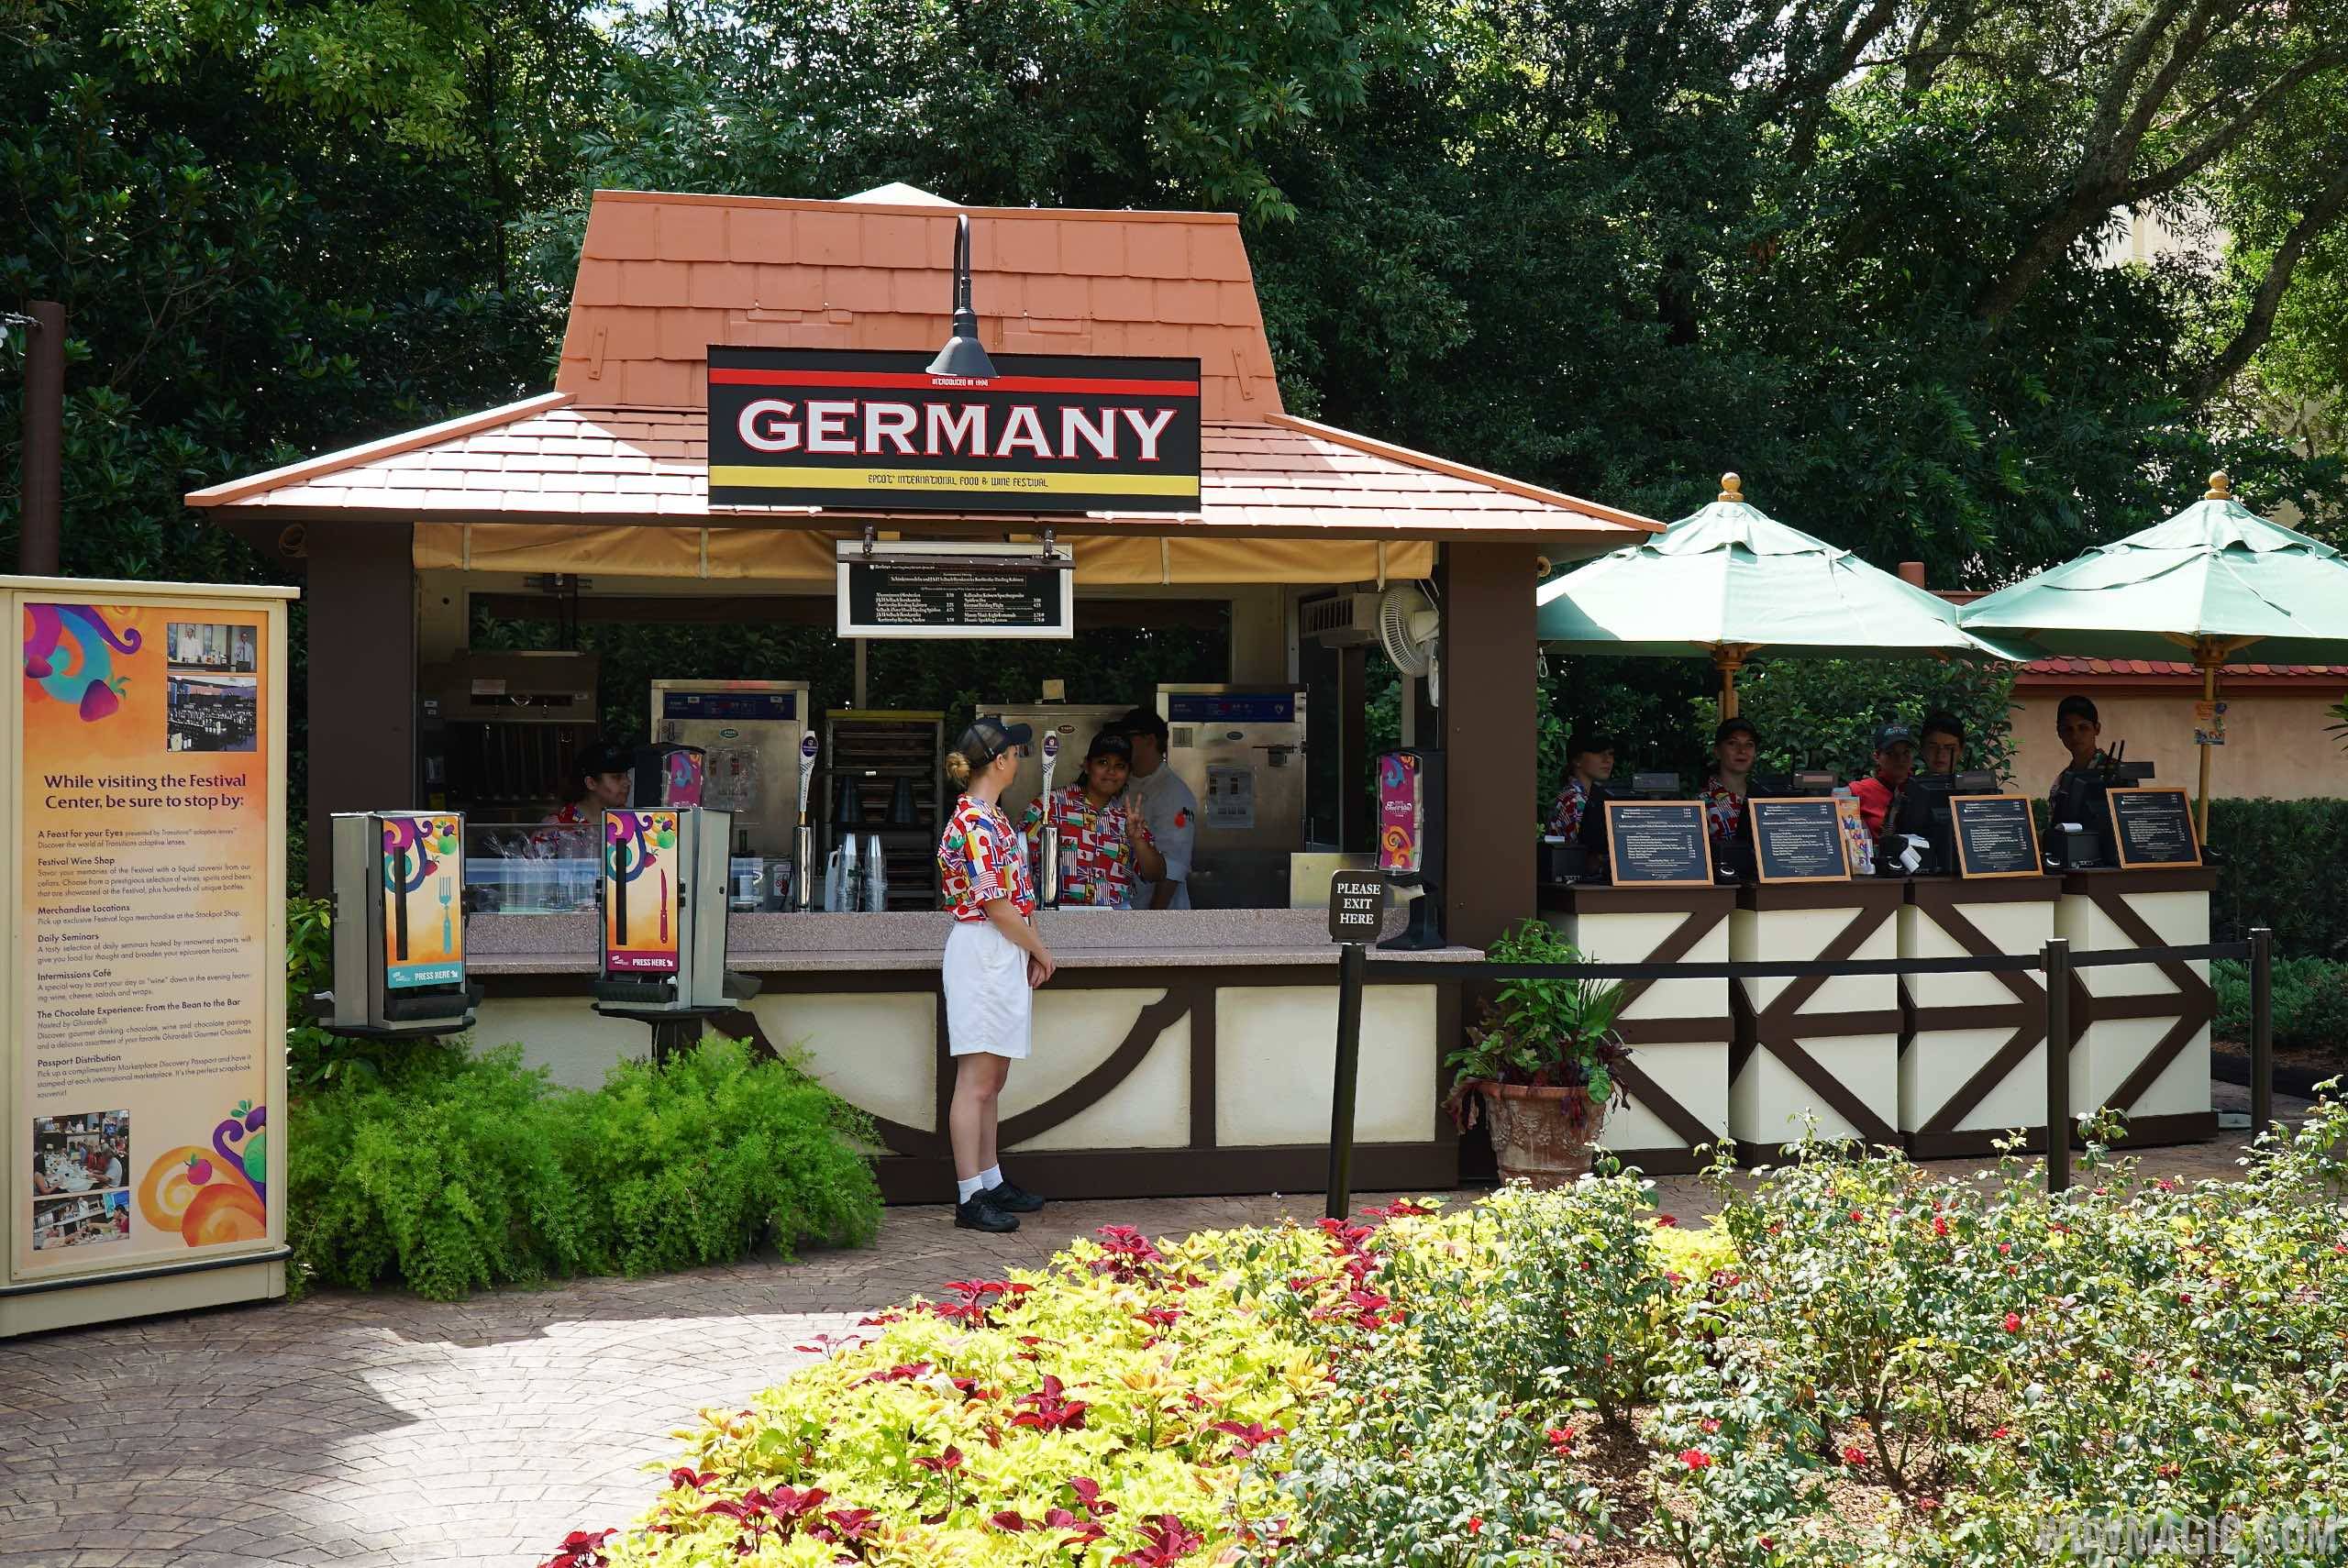 Germany Food and Wine kiosk